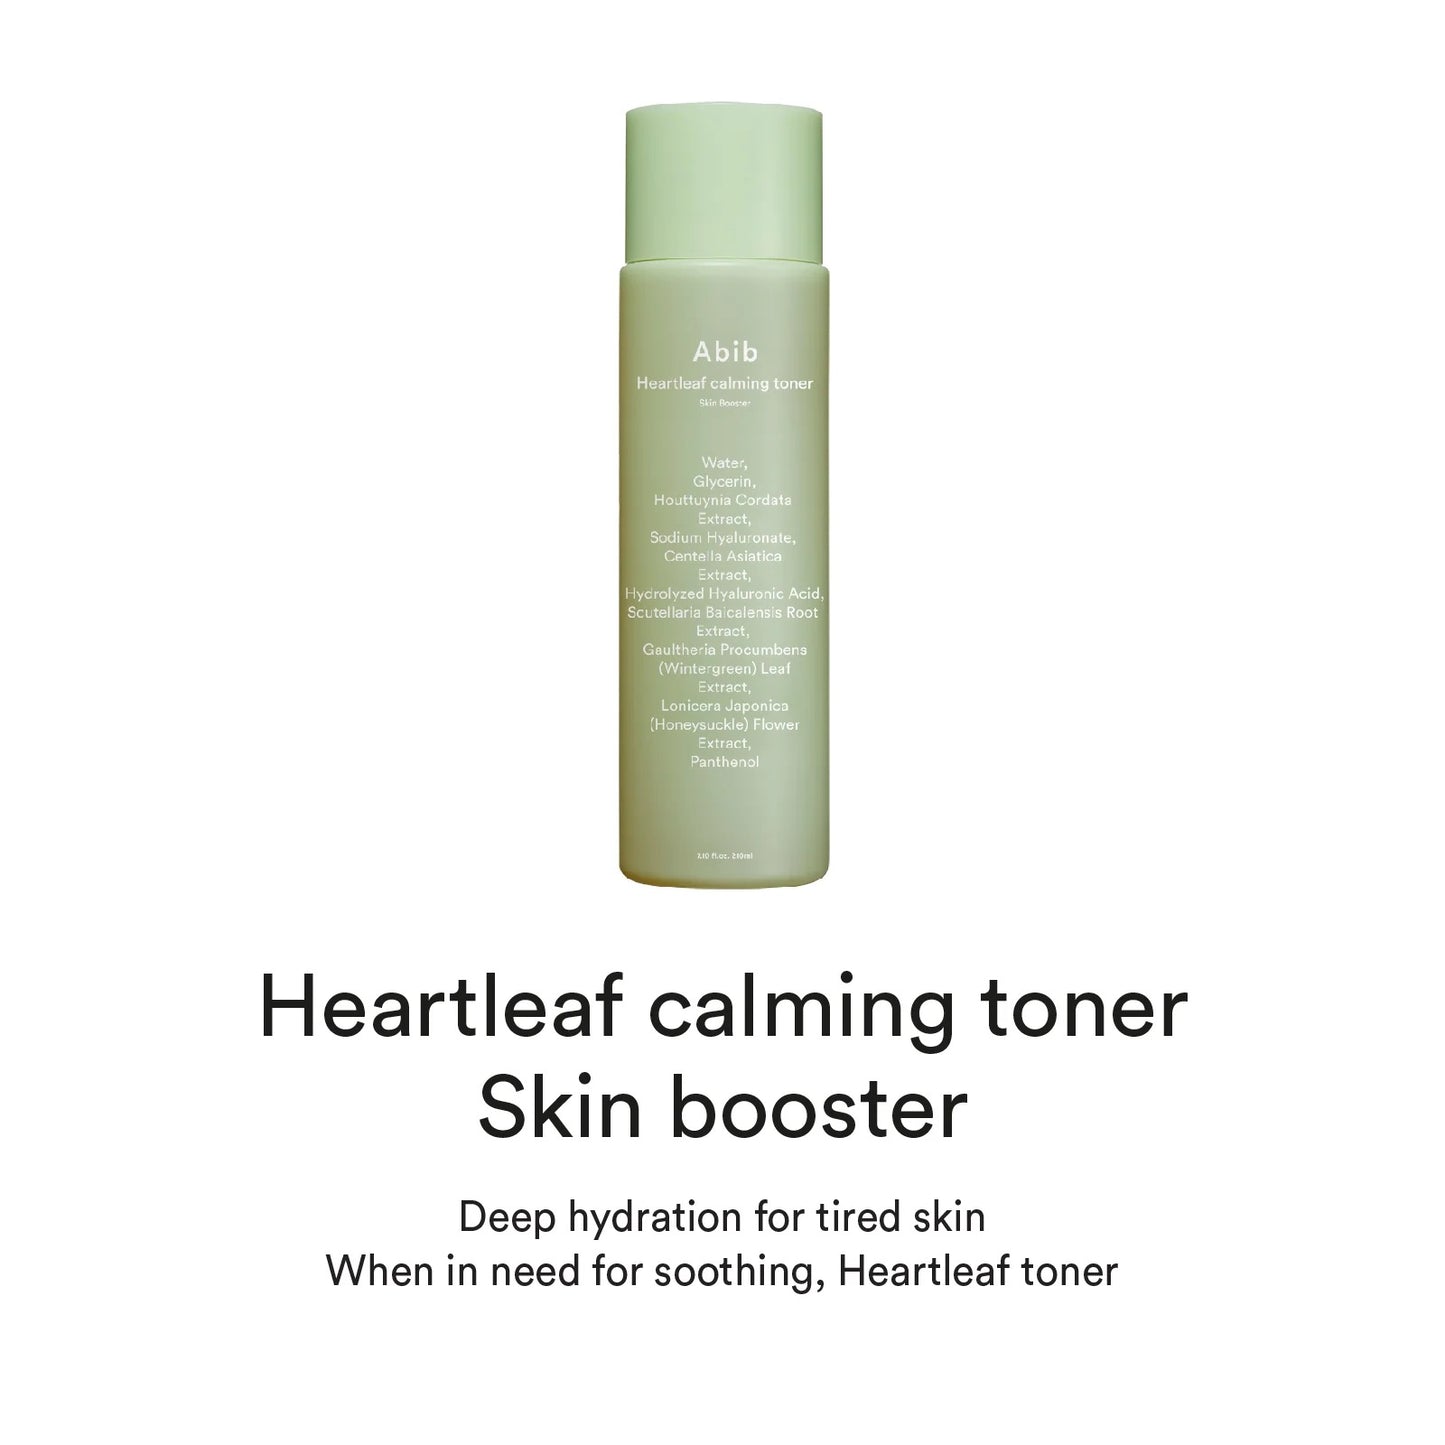 Abib Heartleaf calming toner Skin booster - 200ml